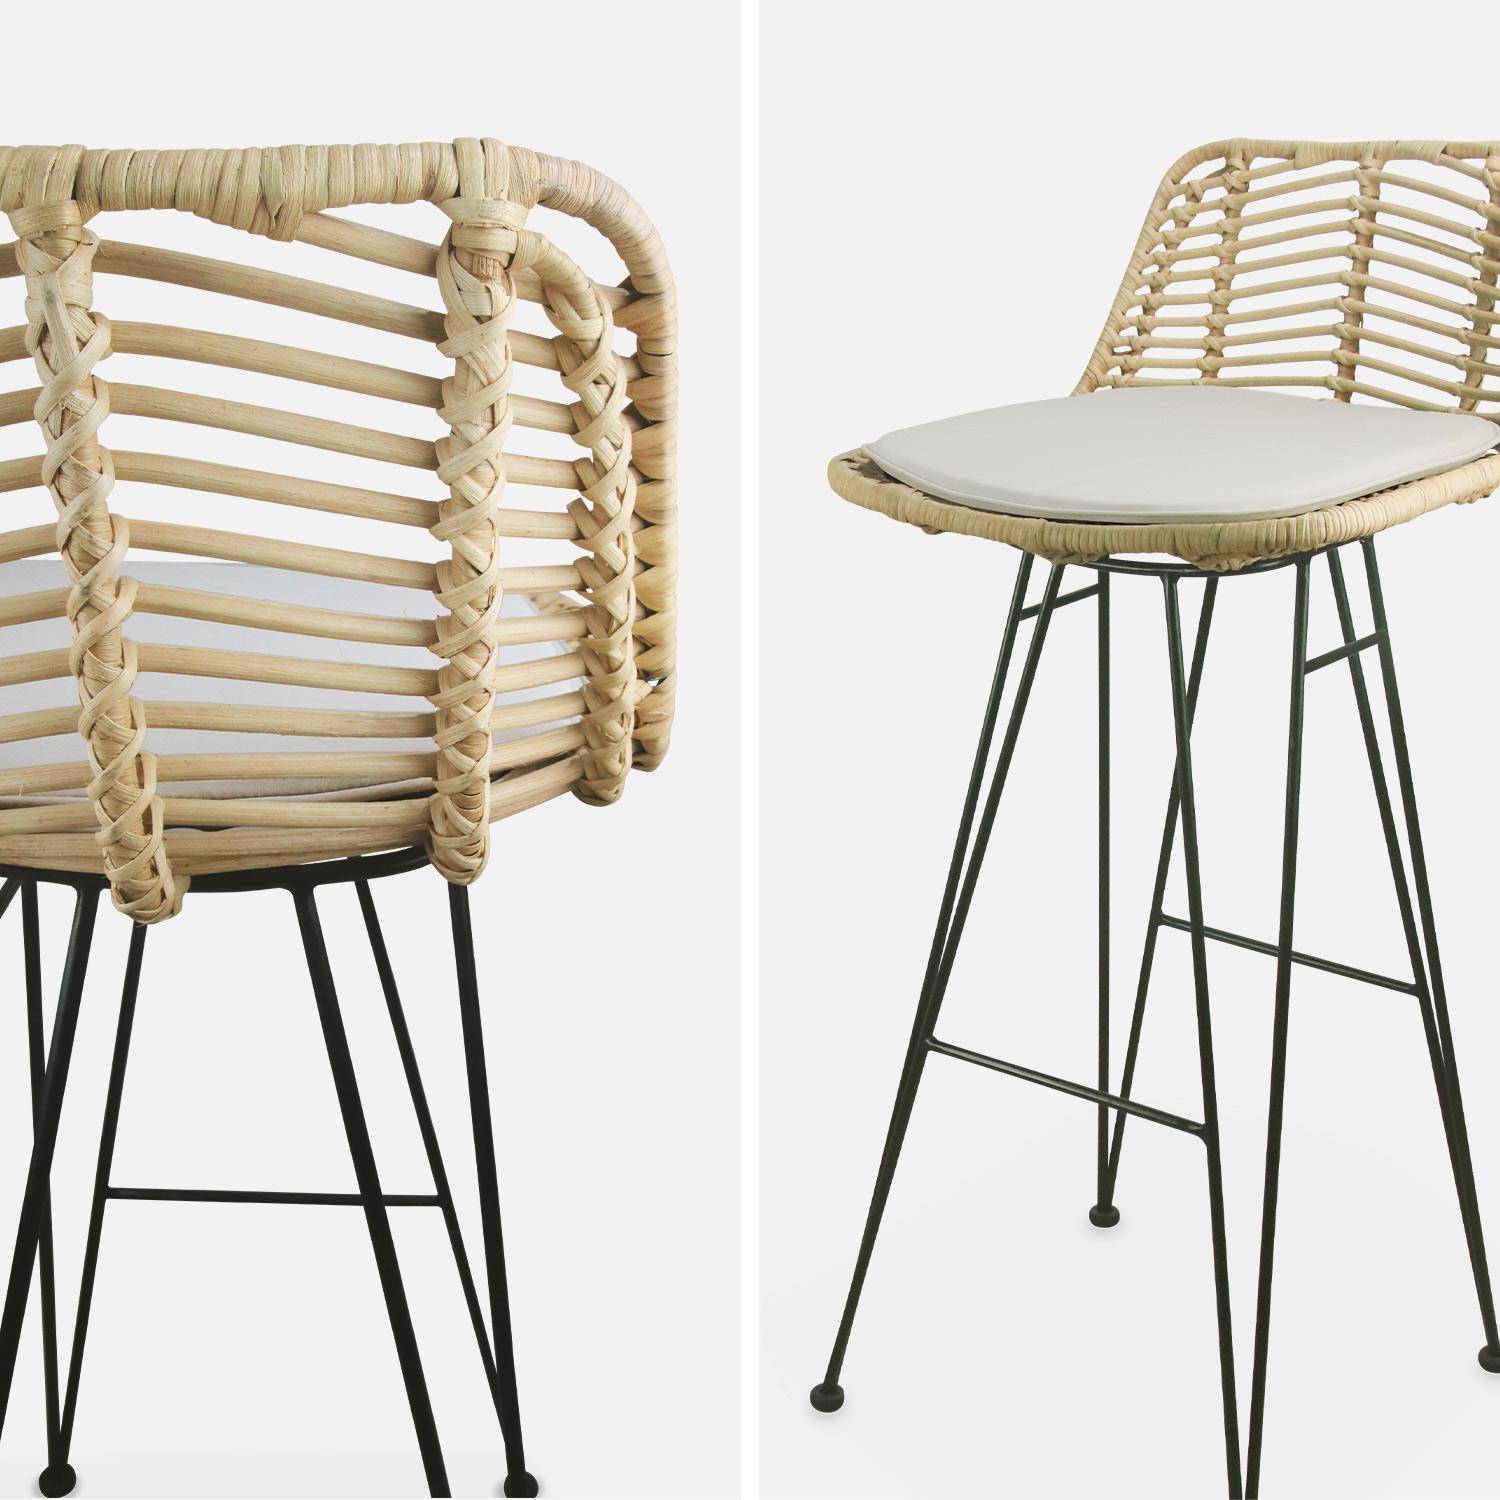 Pair of rattan bar stools, natural, L42.5xD48xH97cm, Cahya,sweeek,Photo6